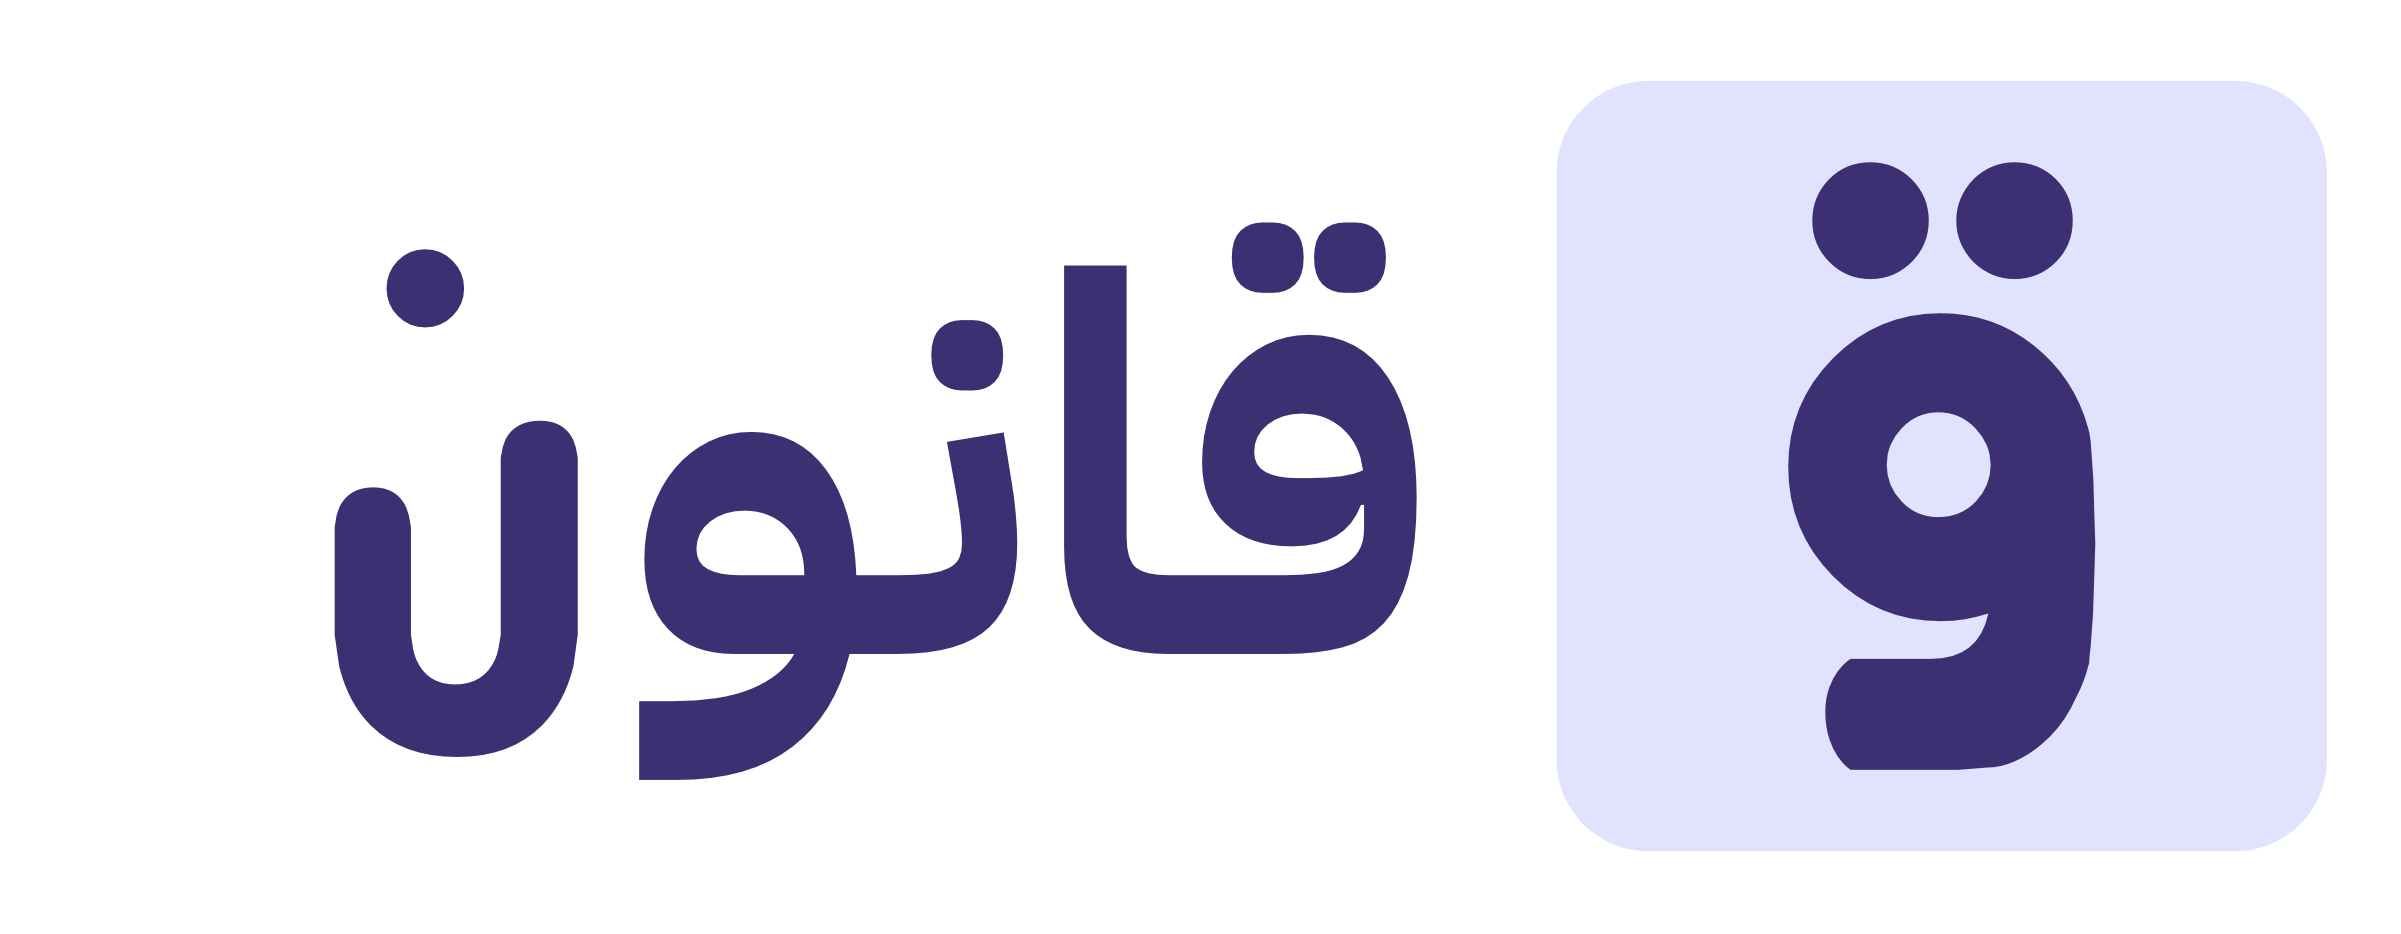 Logo de قانون 9anounji 9anoungi قانـونجـي